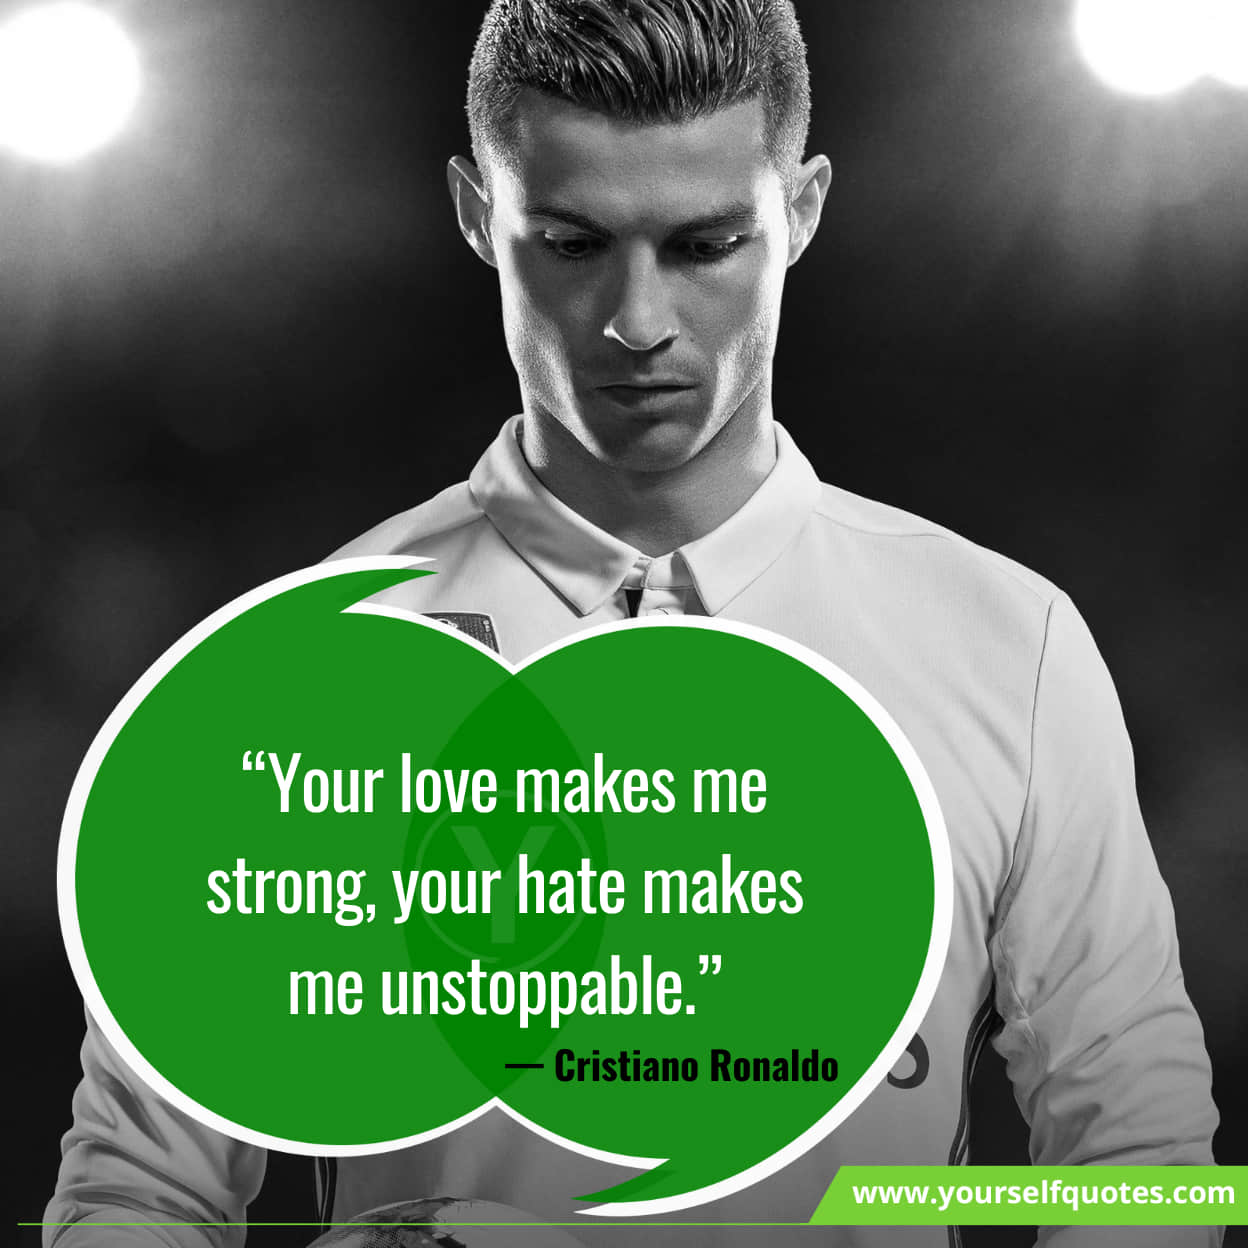 Cristiano Ronaldo Quotes For Success Life